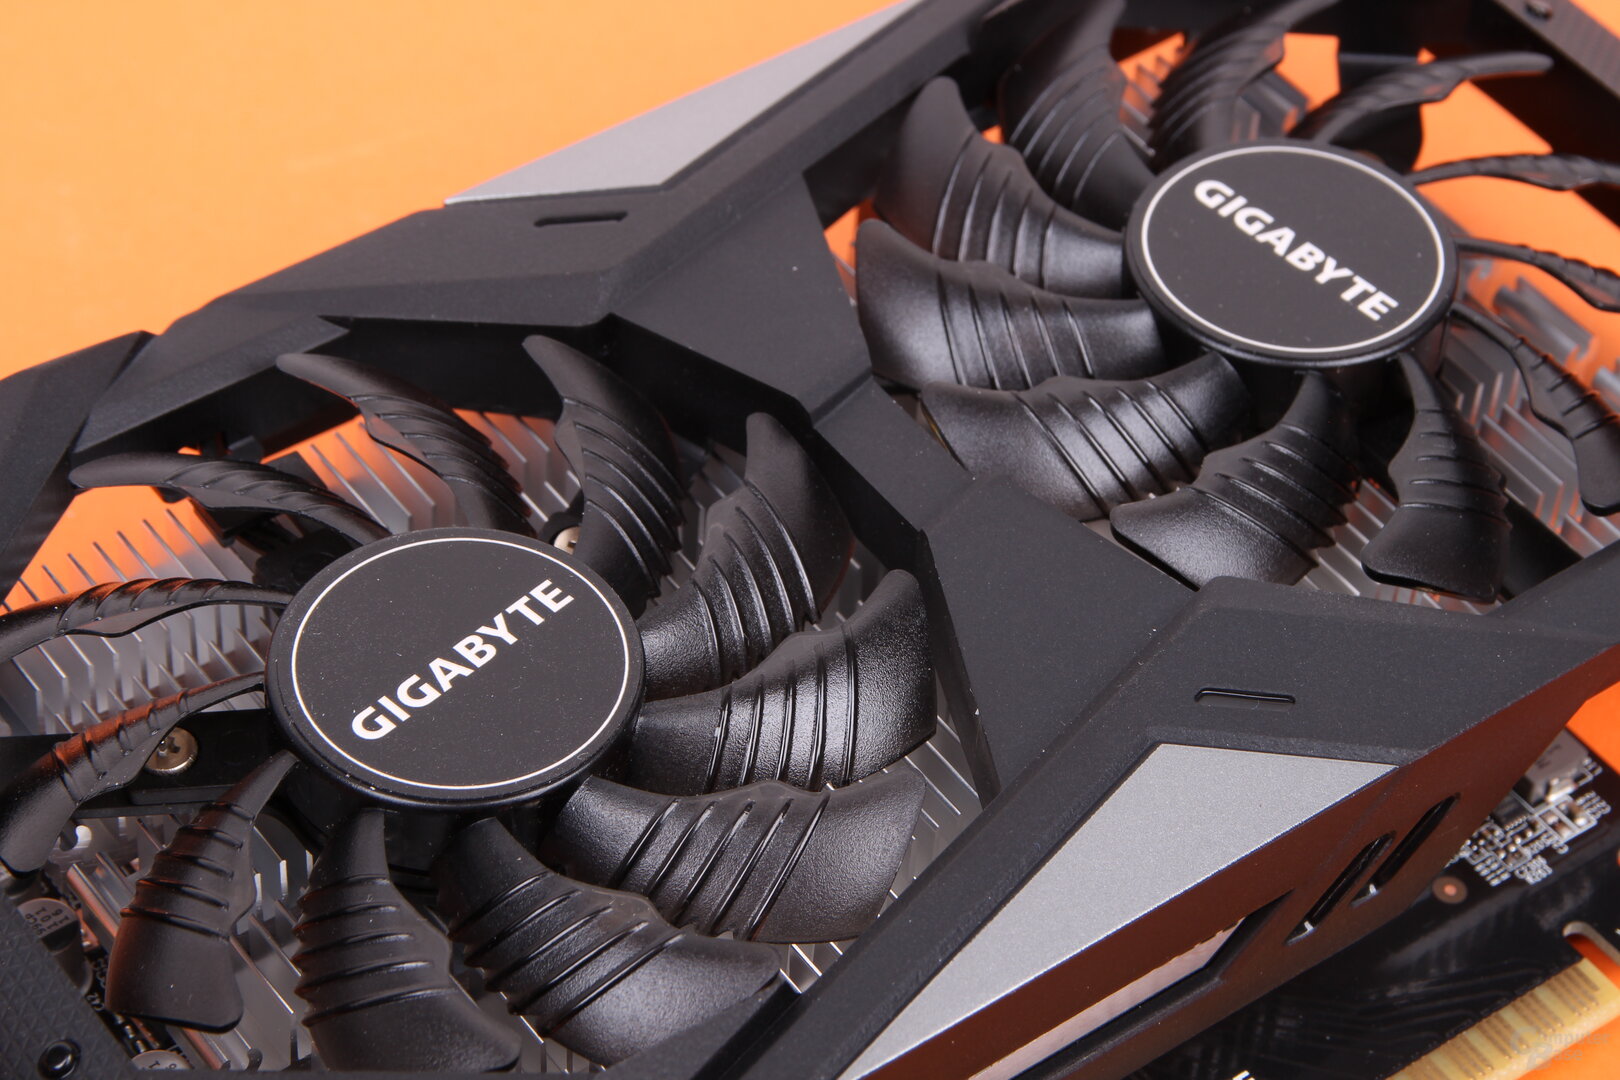 The fans of the Gigabyte GeForce GTX 1650 GDDR6 WindForce OC